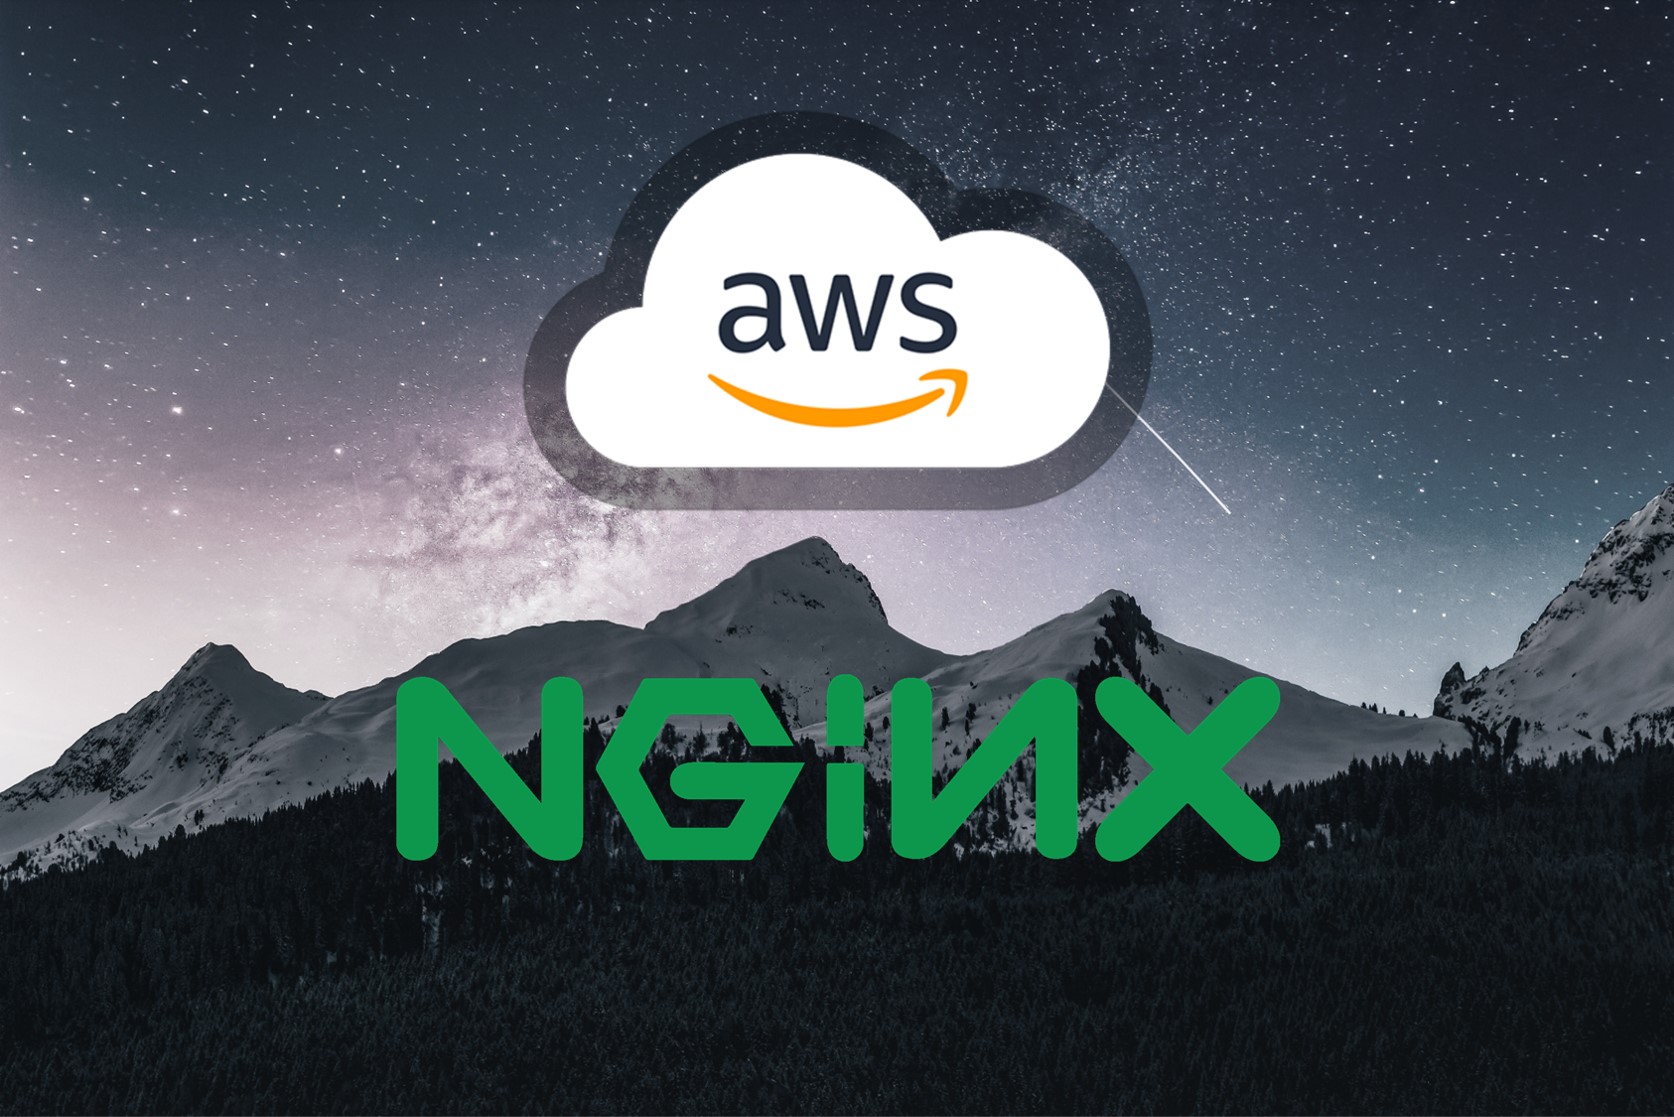 NGINX and AWS logos